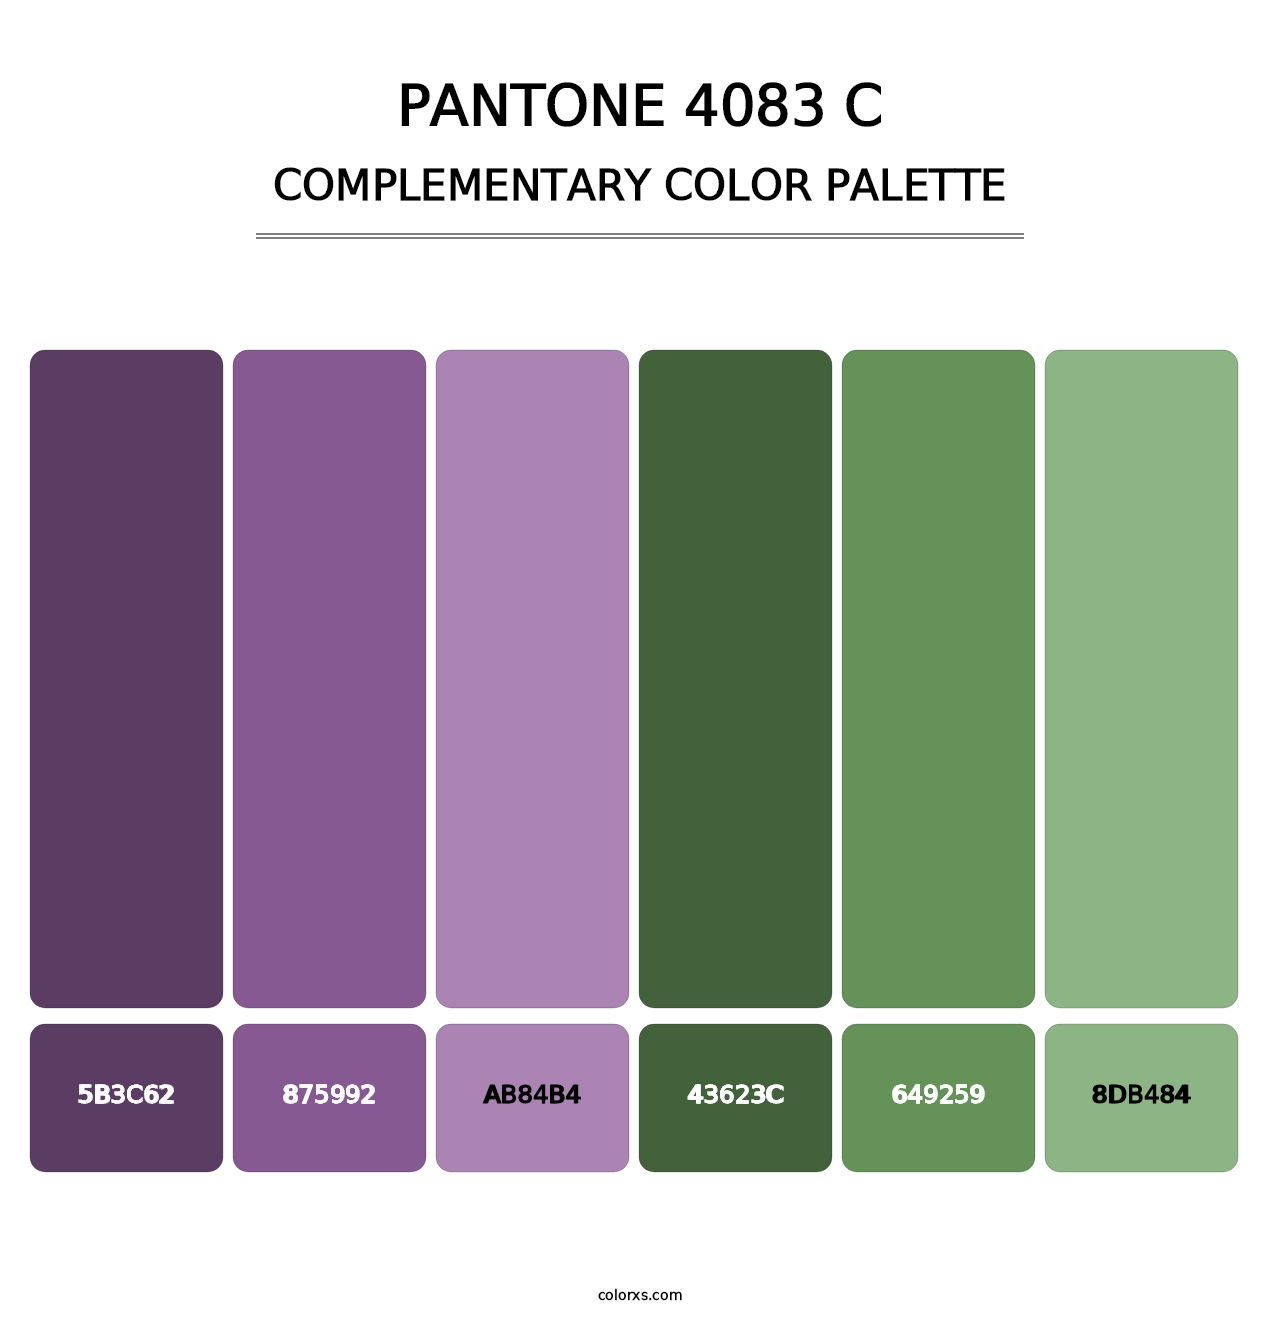 PANTONE 4083 C - Complementary Color Palette